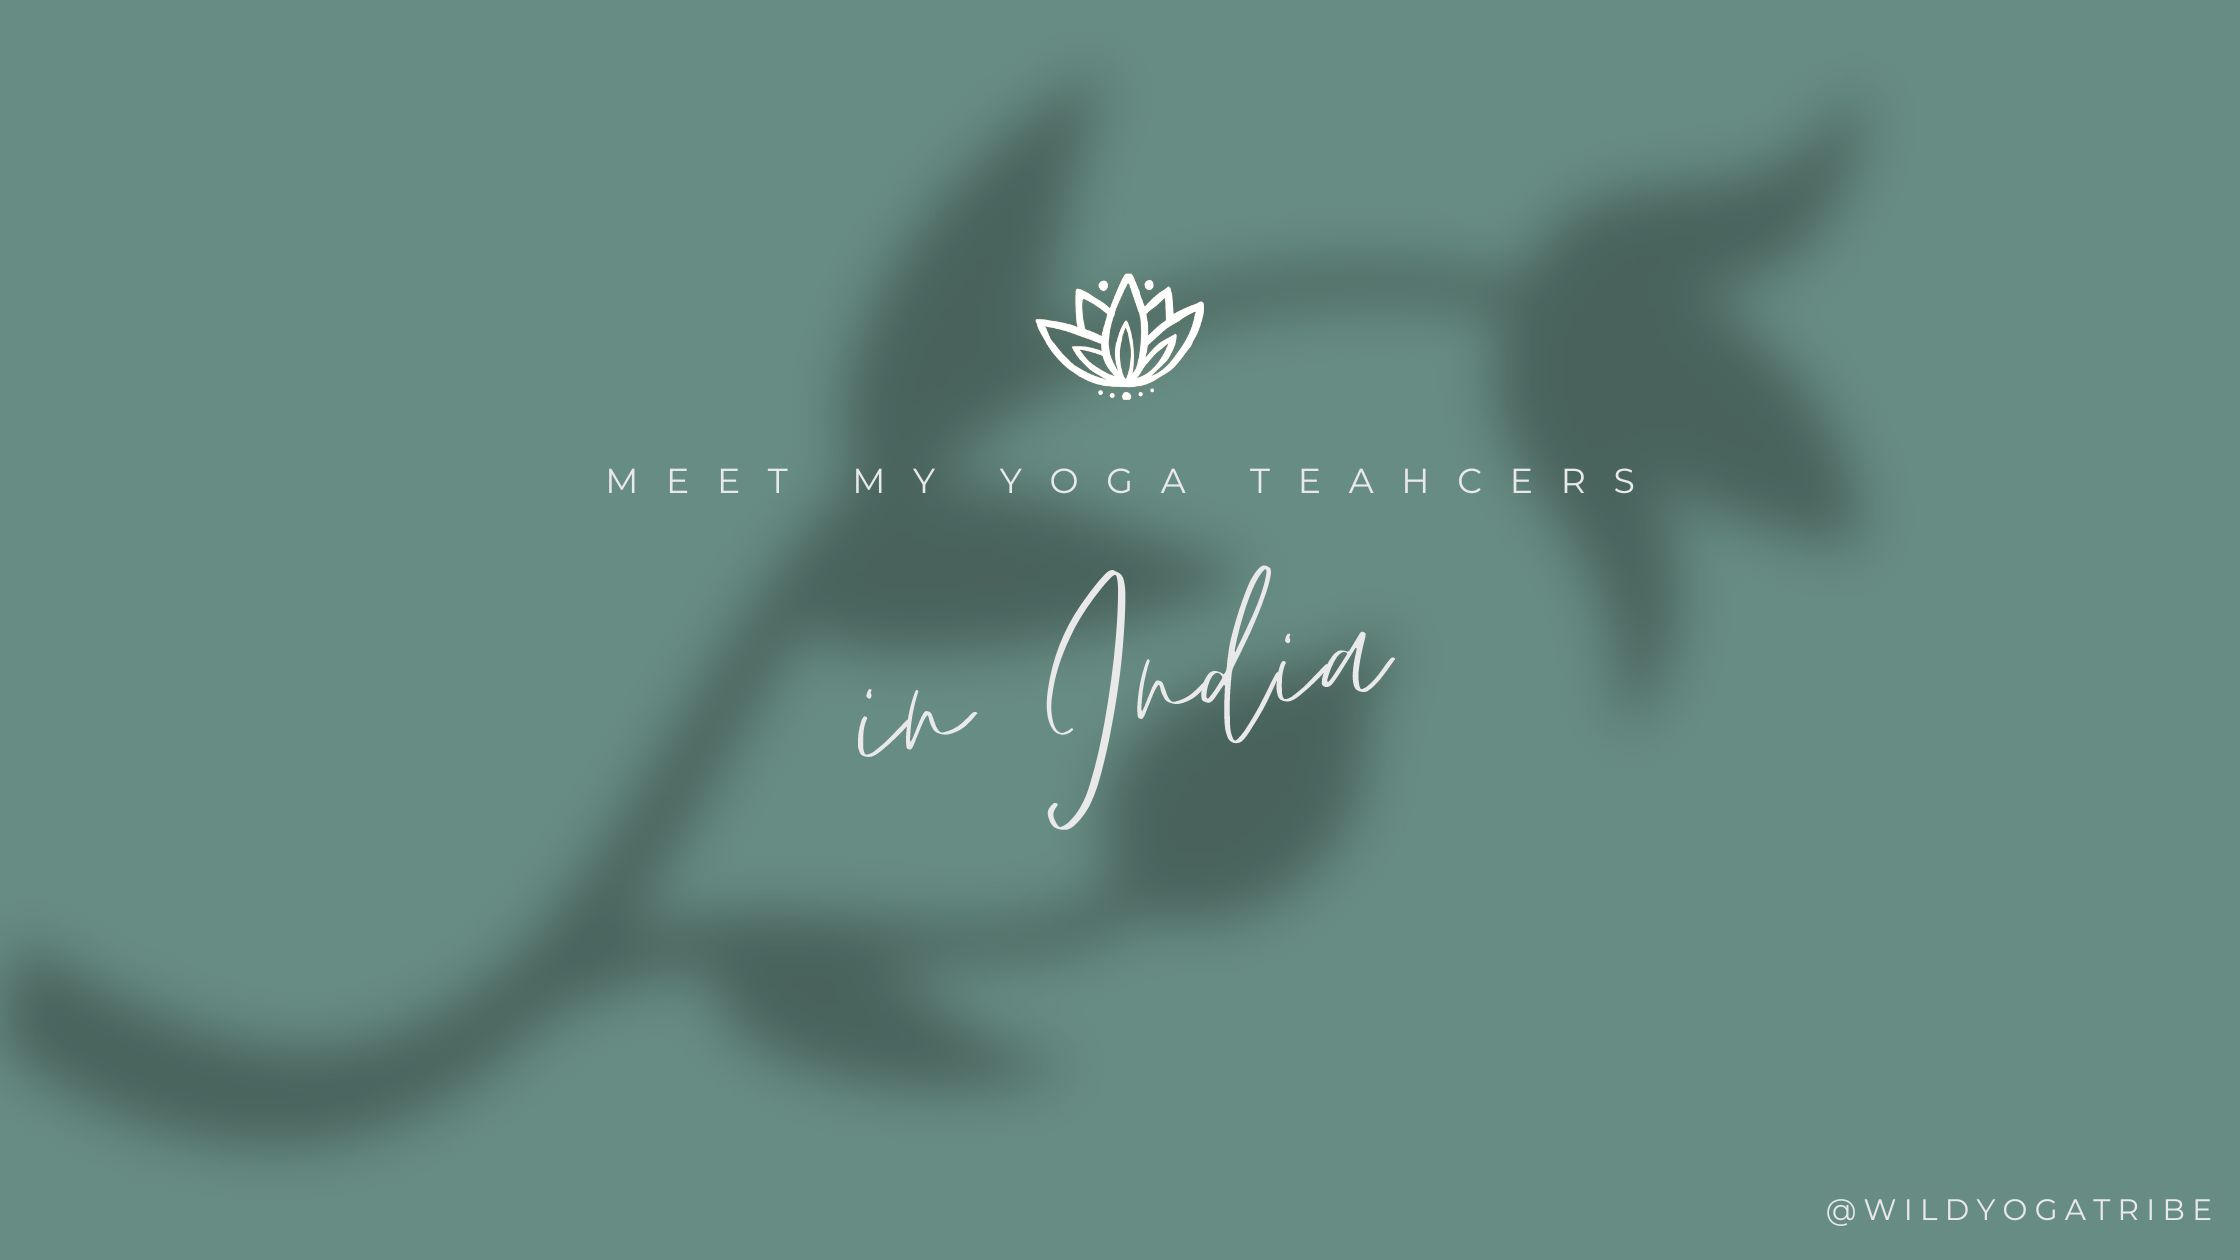 My Yoga Teachers in India